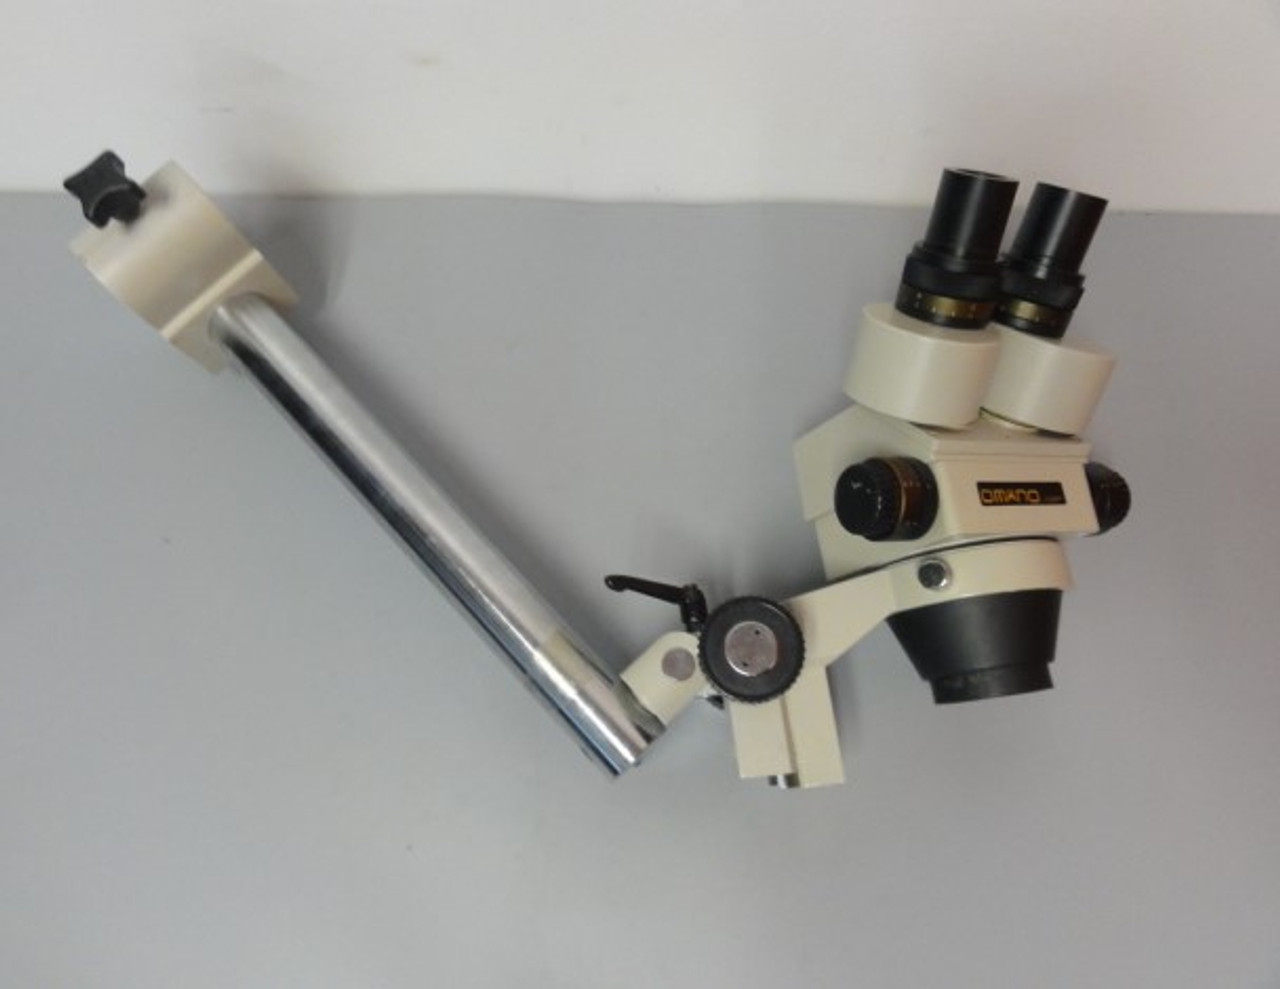 Omano 2300JV Microscope w/ Extension Arm